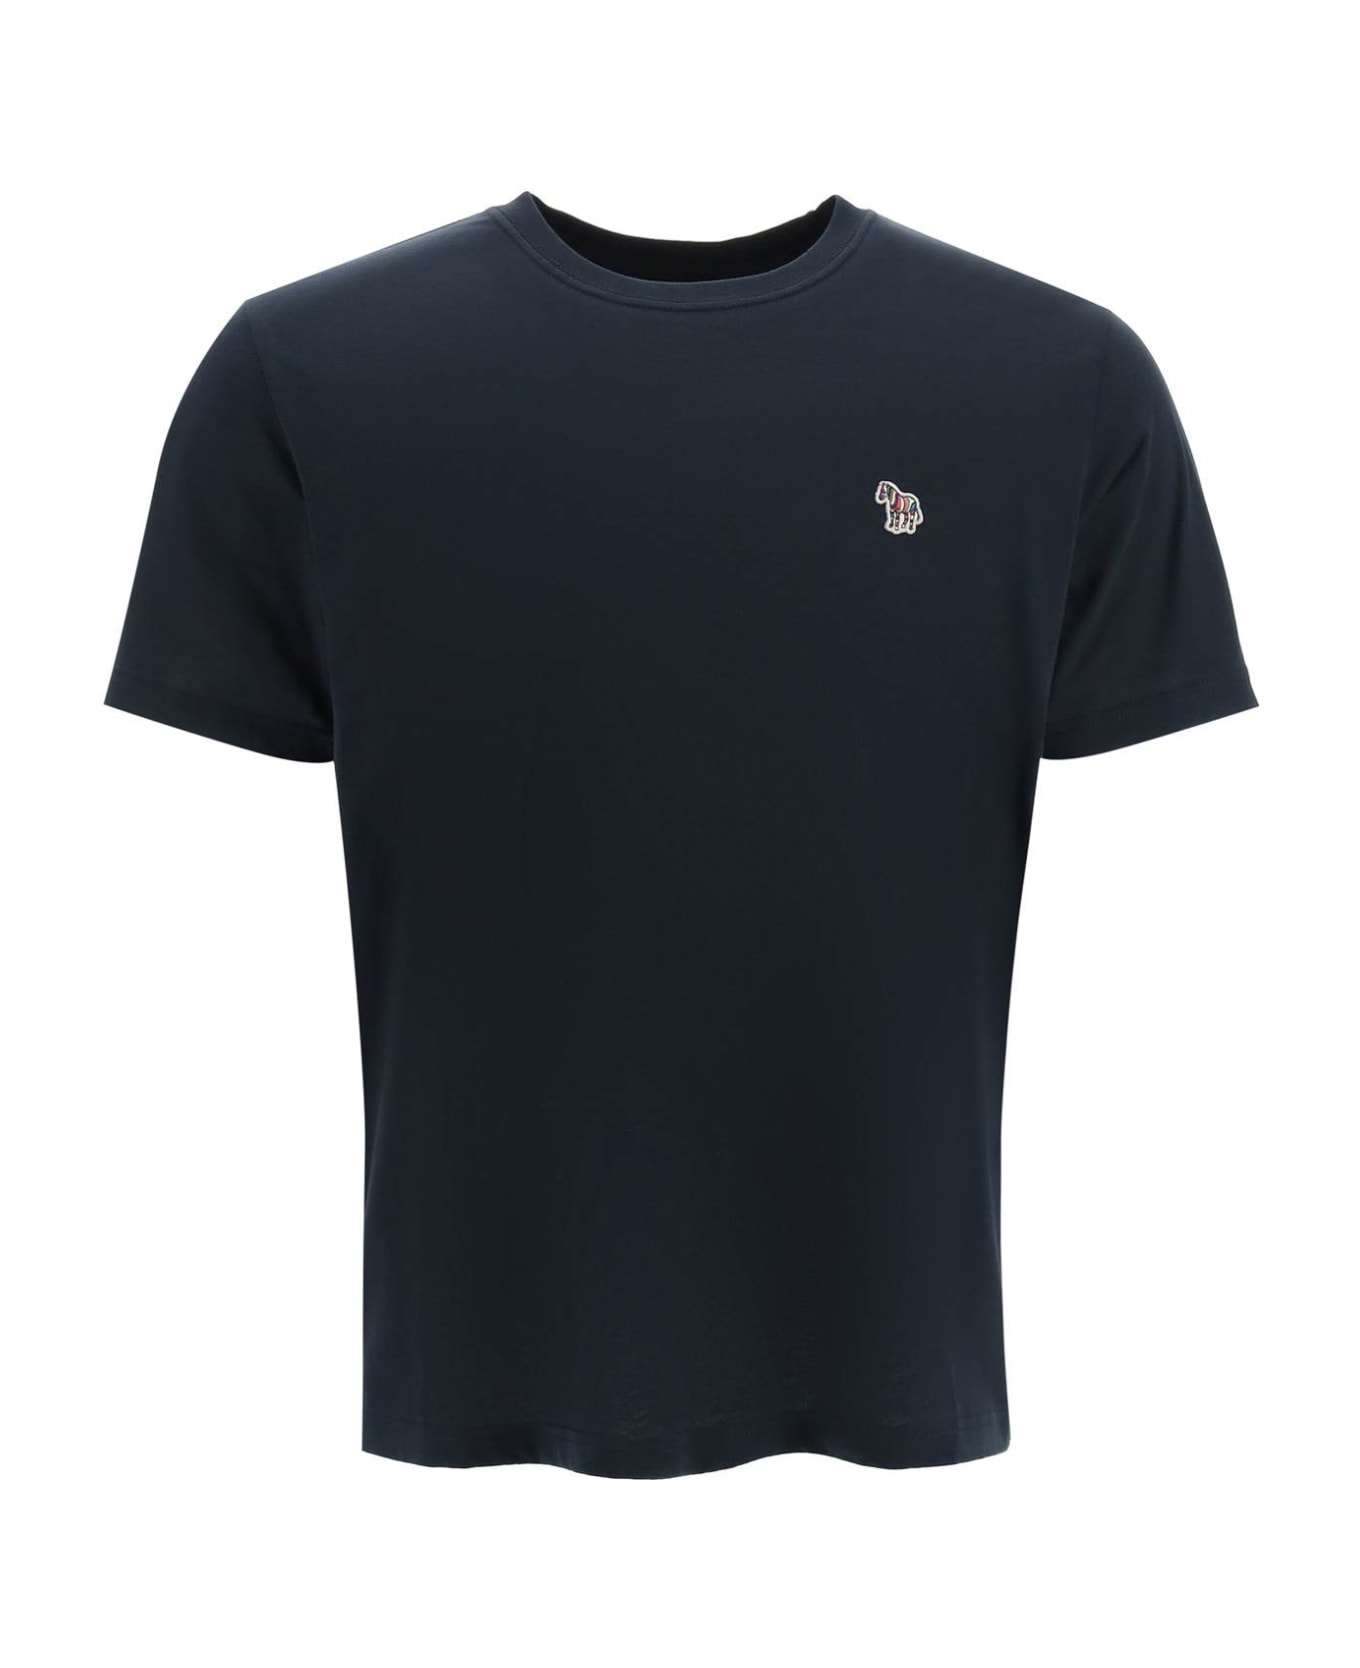 Paul Smith T-shirt - VERY DARK NAVY (Blue)